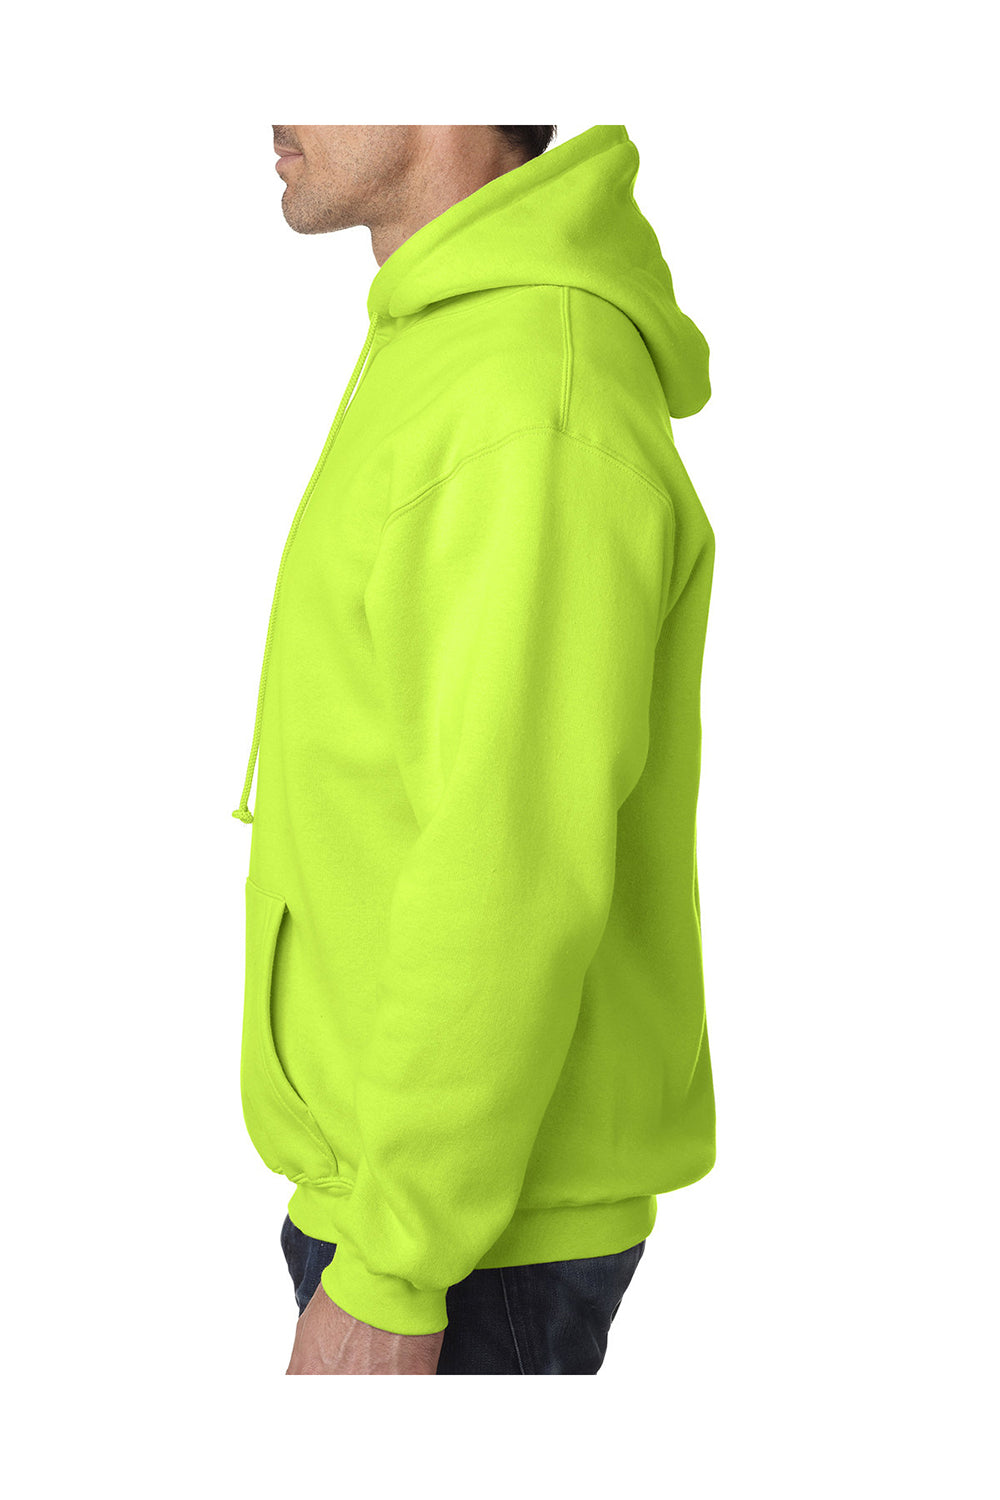 Bayside BA960 Mens USA Made Hooded Sweatshirt Hoodie Lime Green Model Side